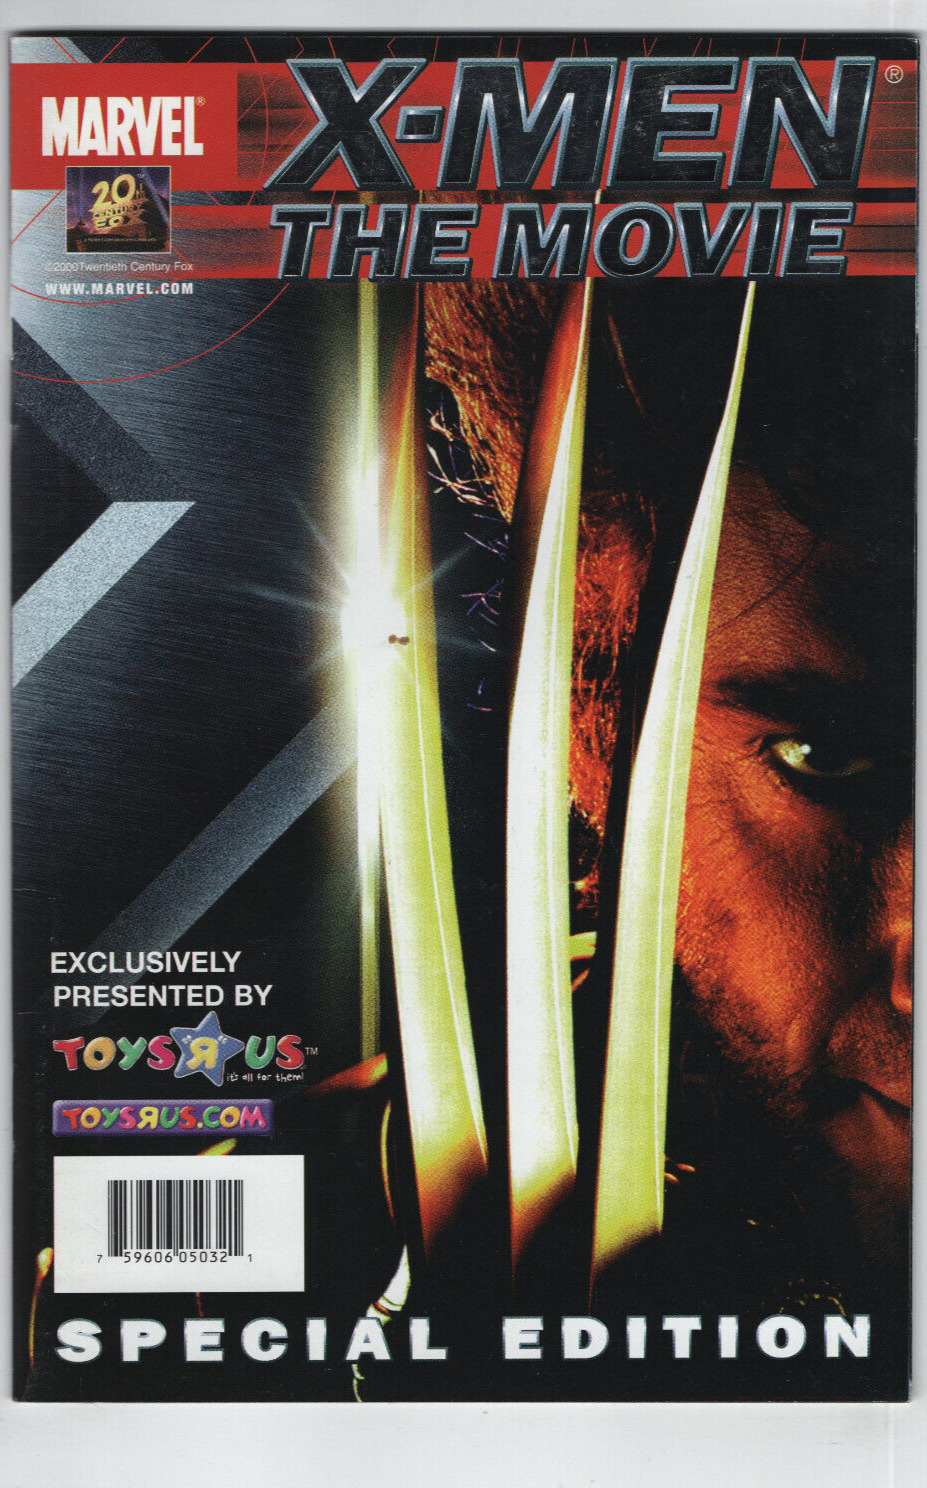 X-MEN THE MOVIE#1 TOYS R US HUGH JACKMAN PHOTO FOIL VARIANT 2000 MARVEL COMICS 